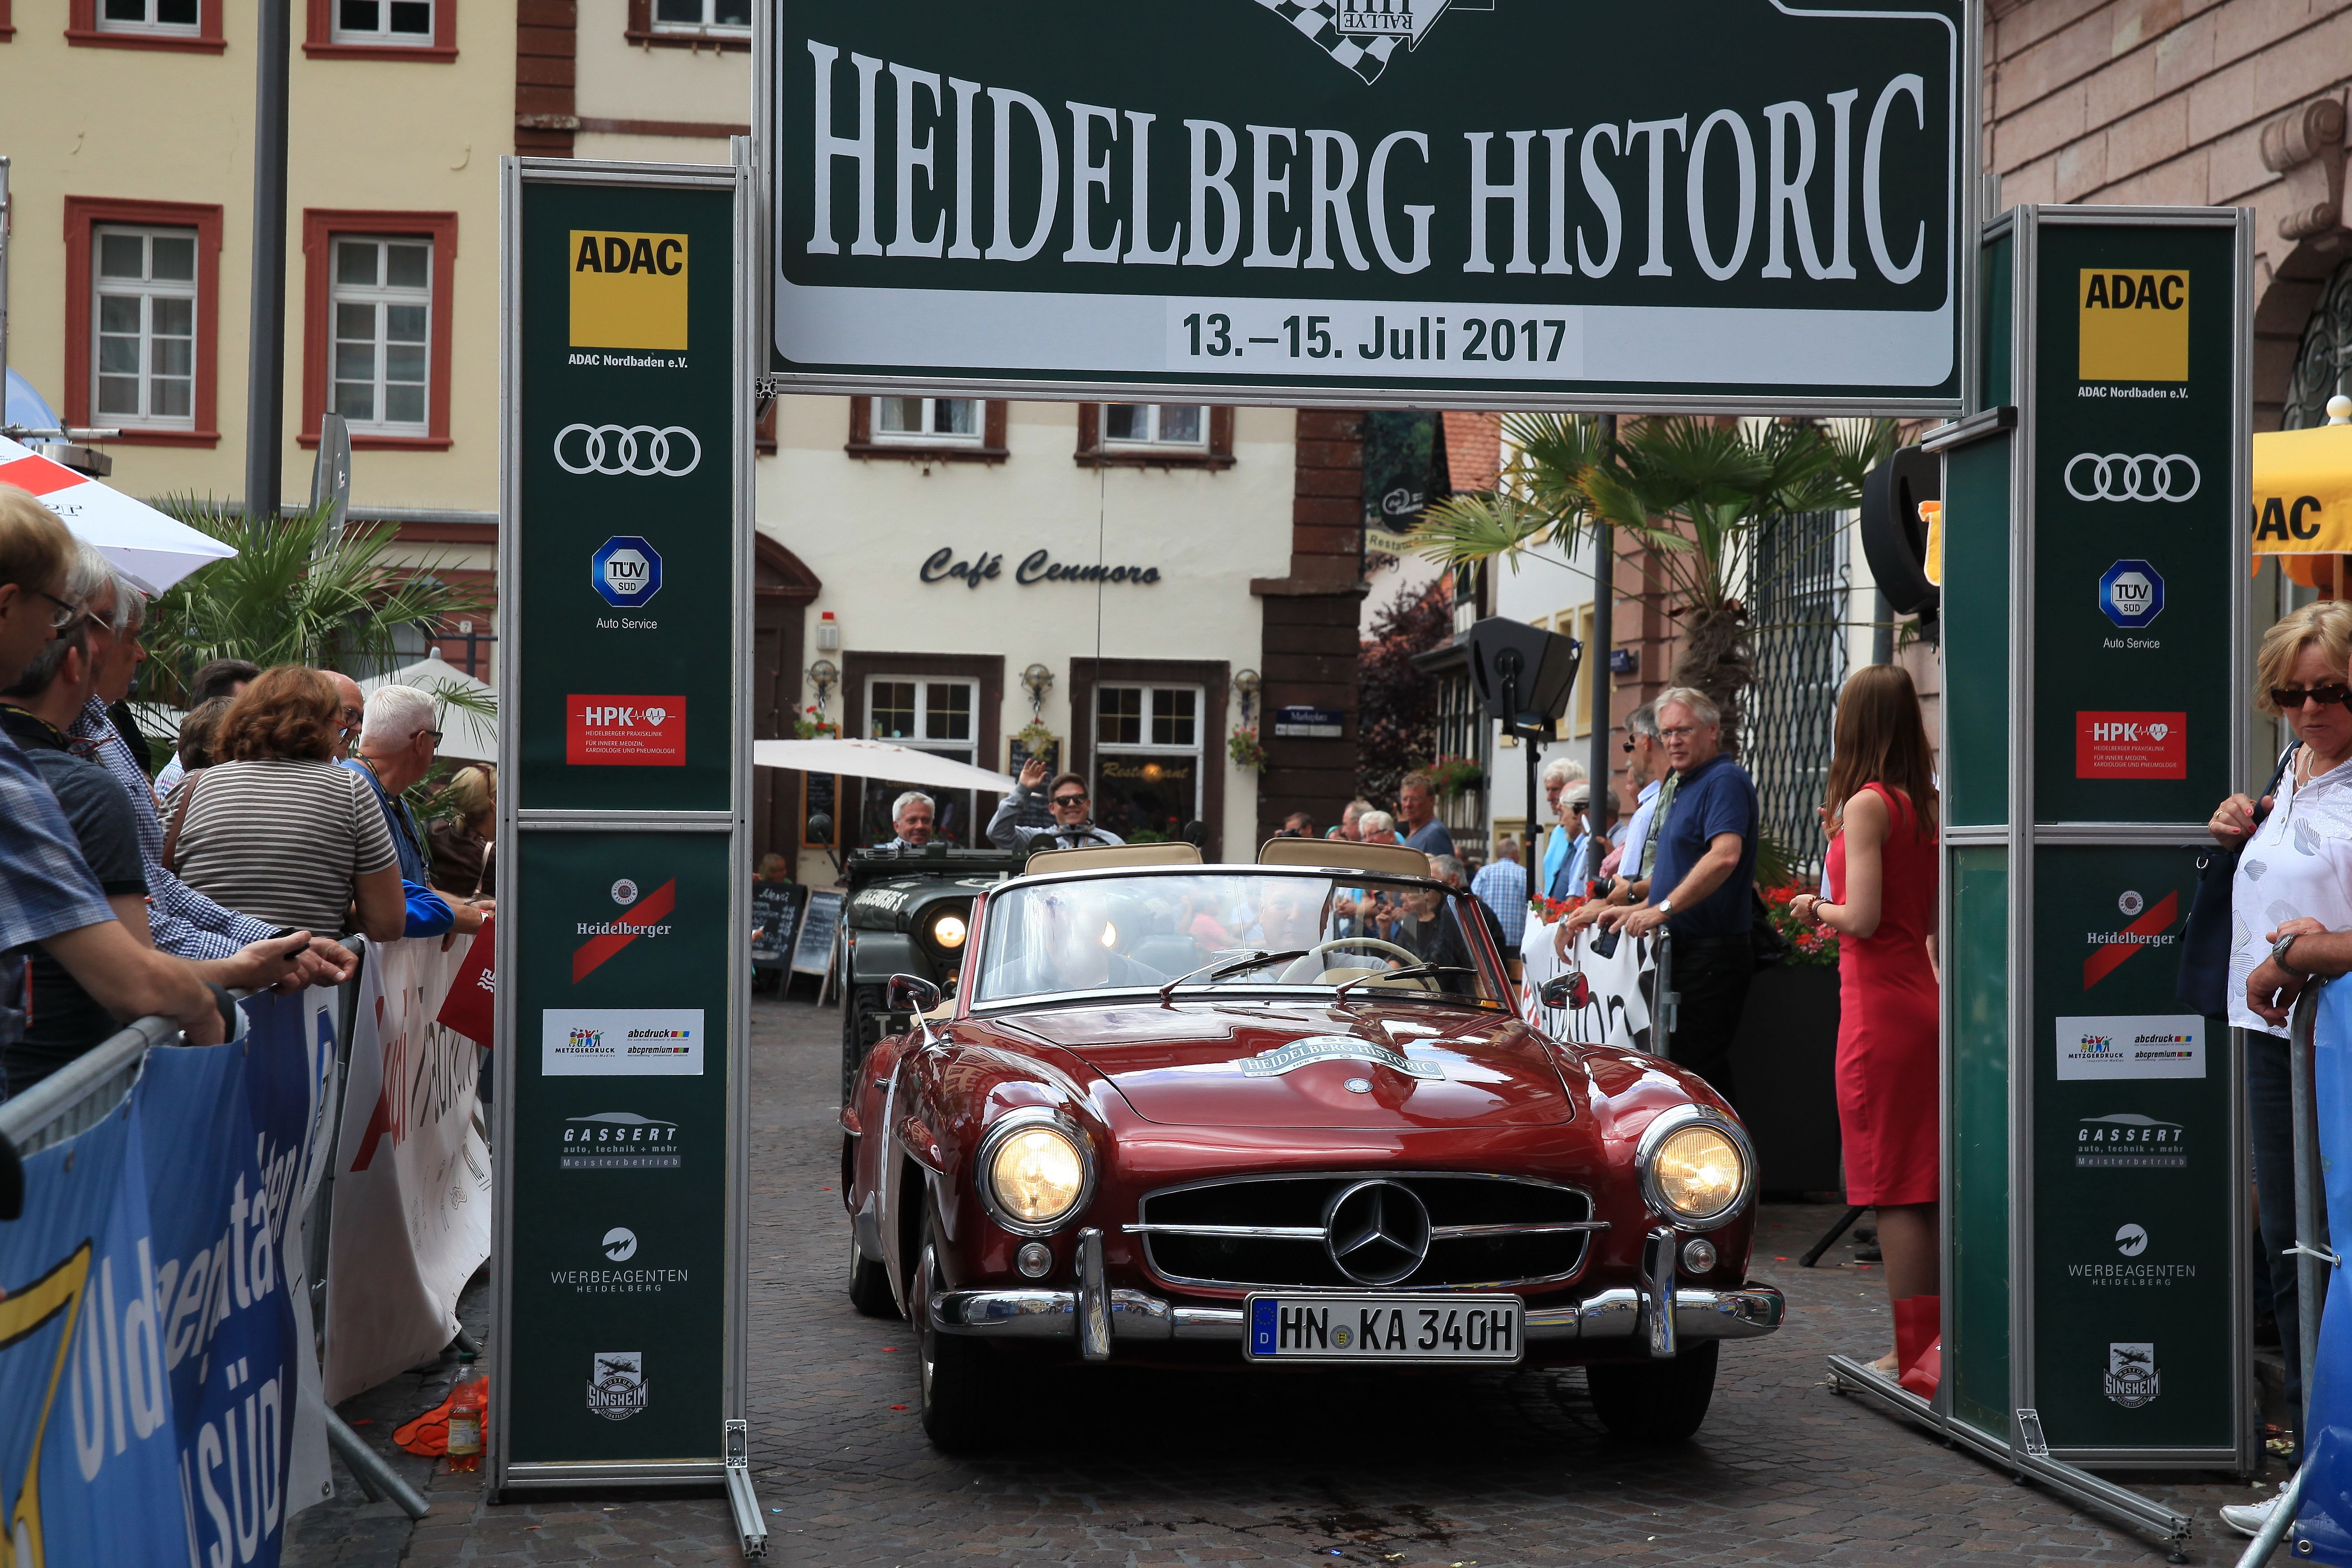 Heidelberg Historic 2017